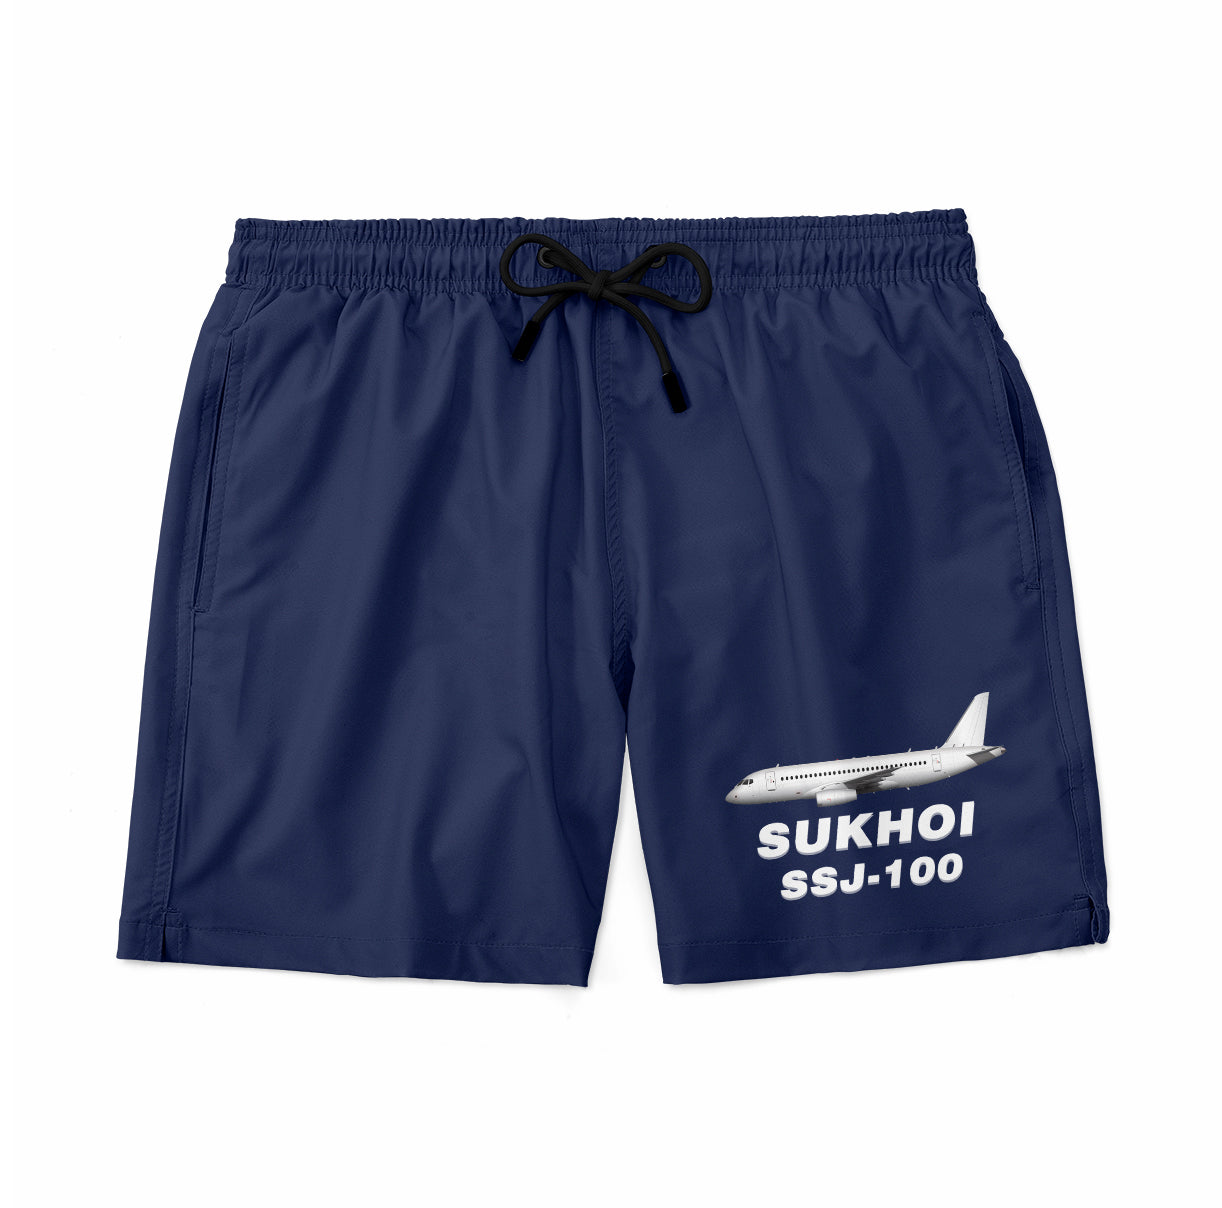 Sukhoi Superjet 100 Designed Swim Trunks & Shorts